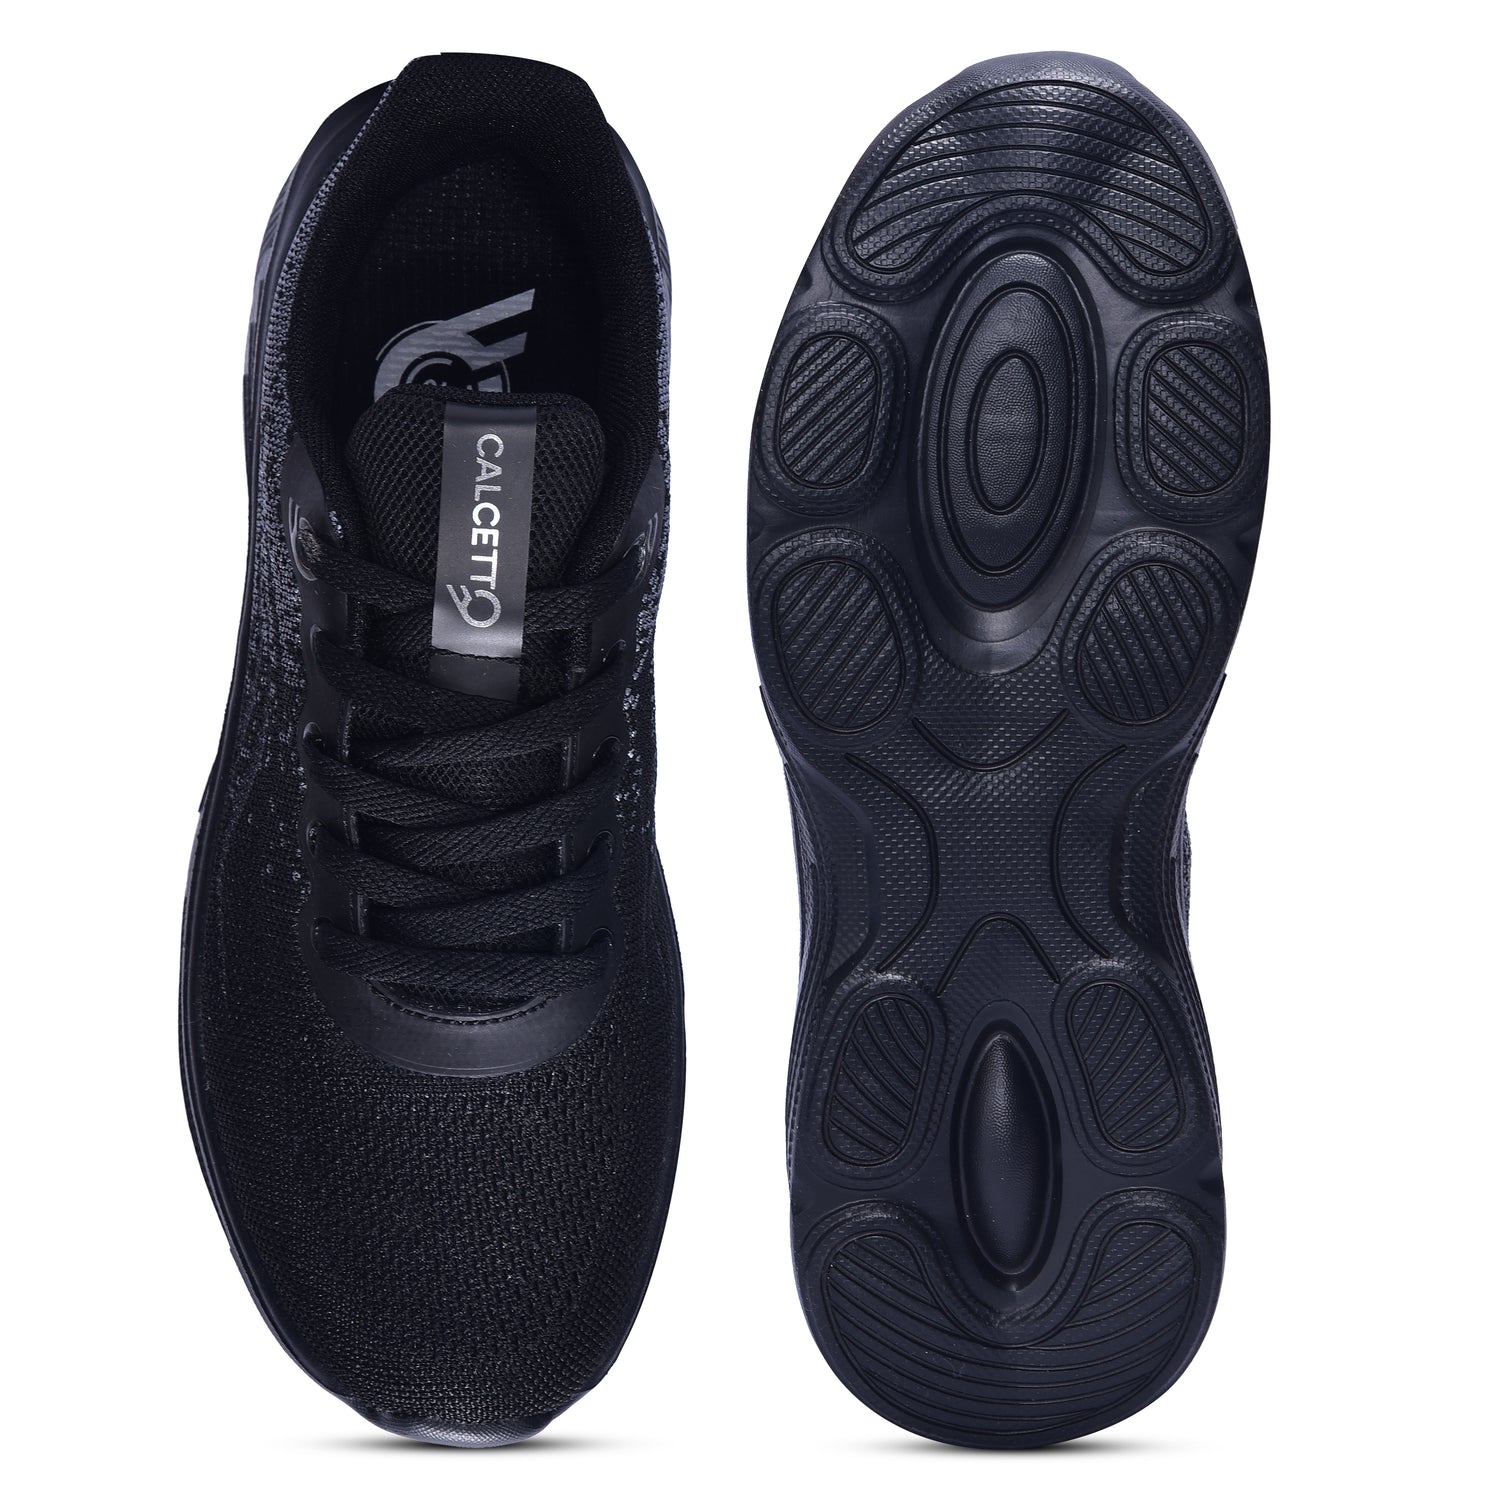 Calcetto CLT-9825 Black Casual Shoe For Women